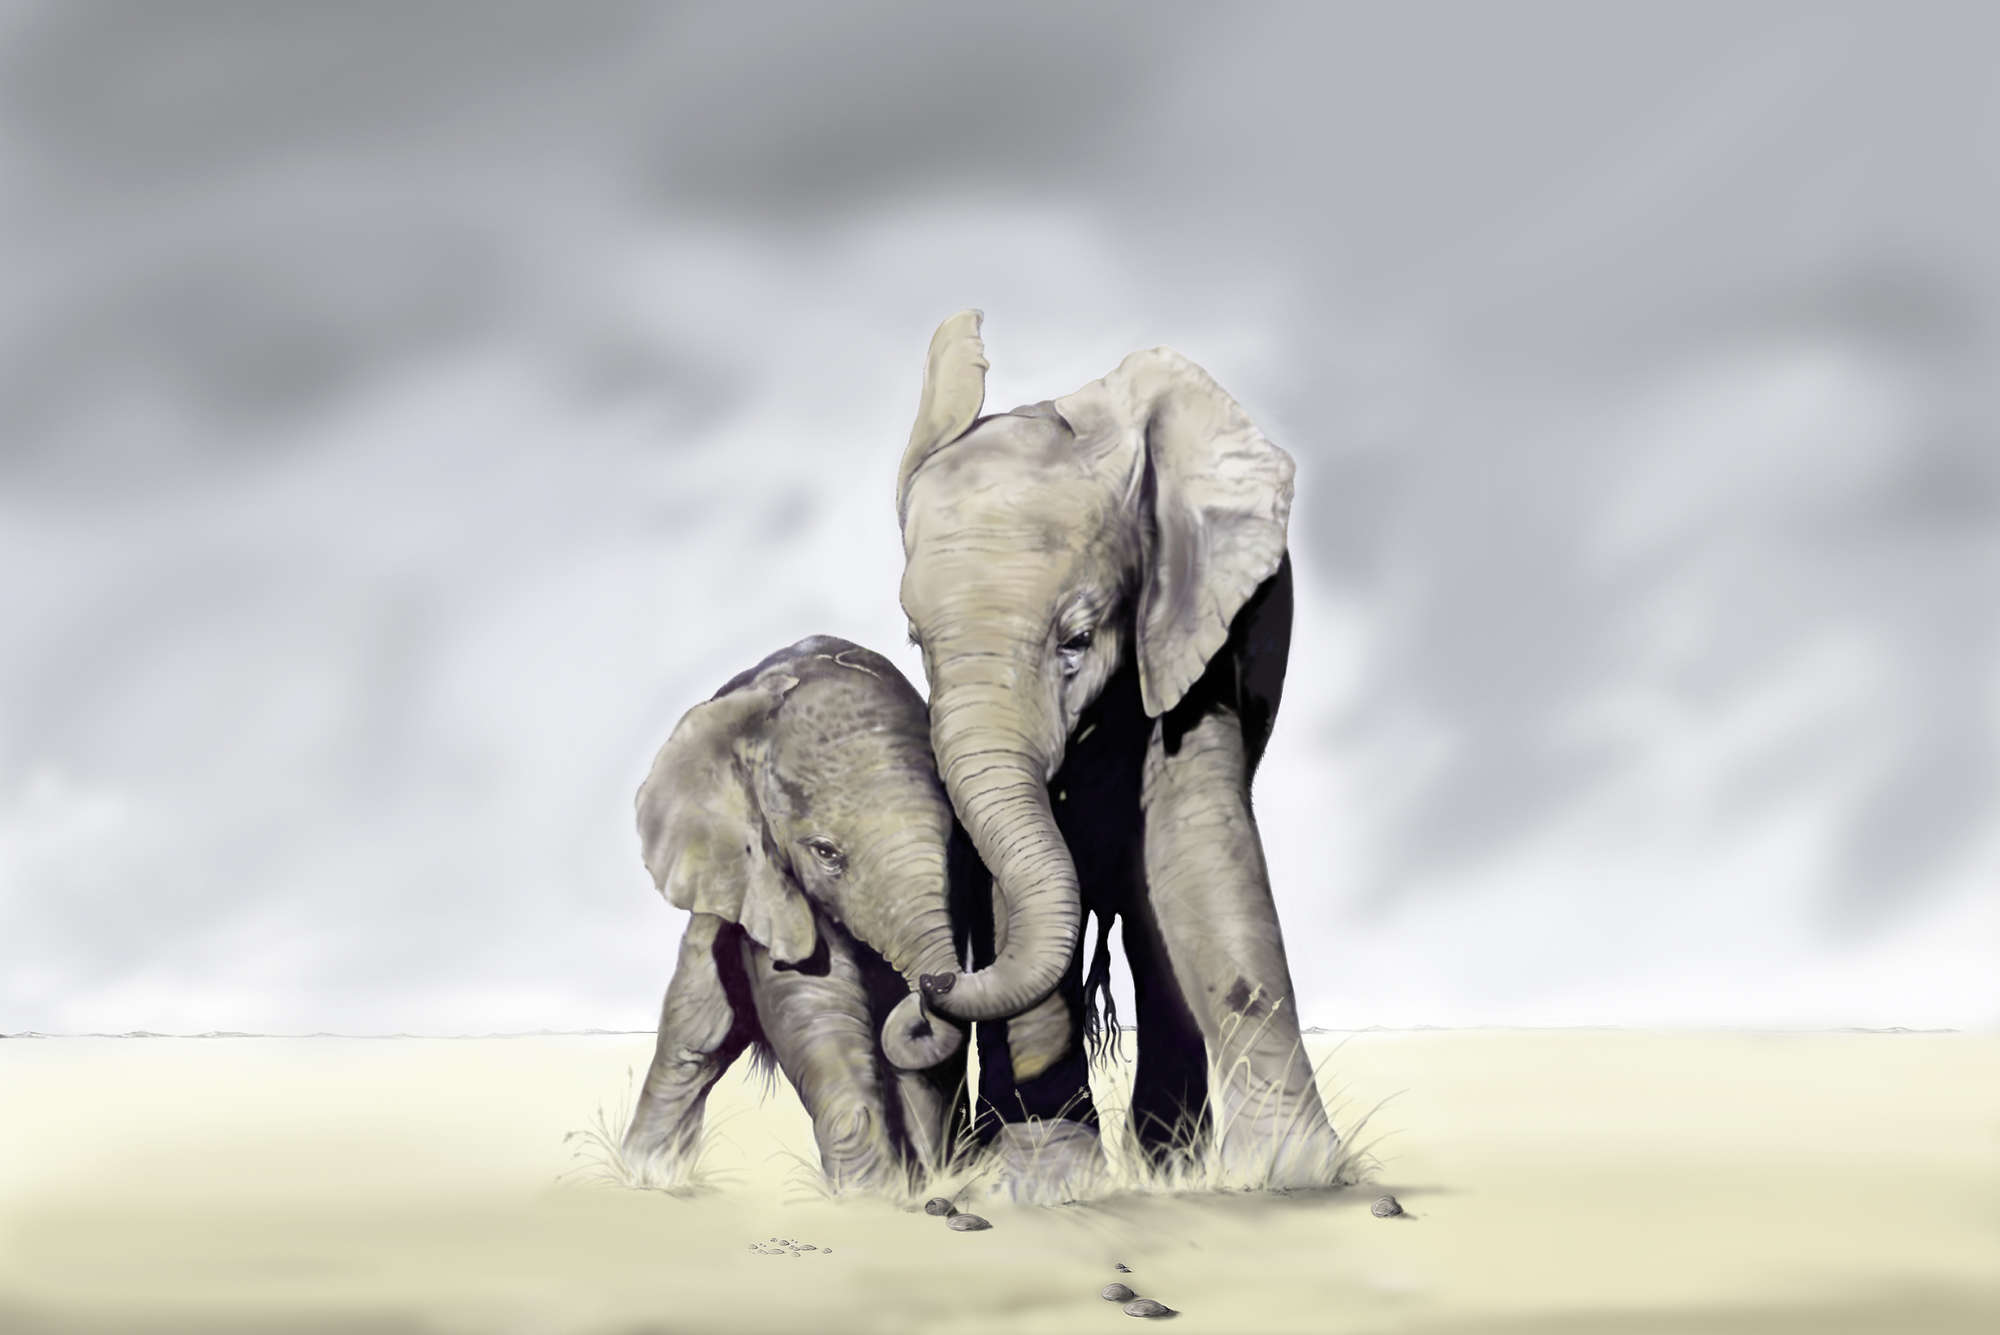             Papel pintado Animales Elefantes gratis - Premium Smooth Fleece
        